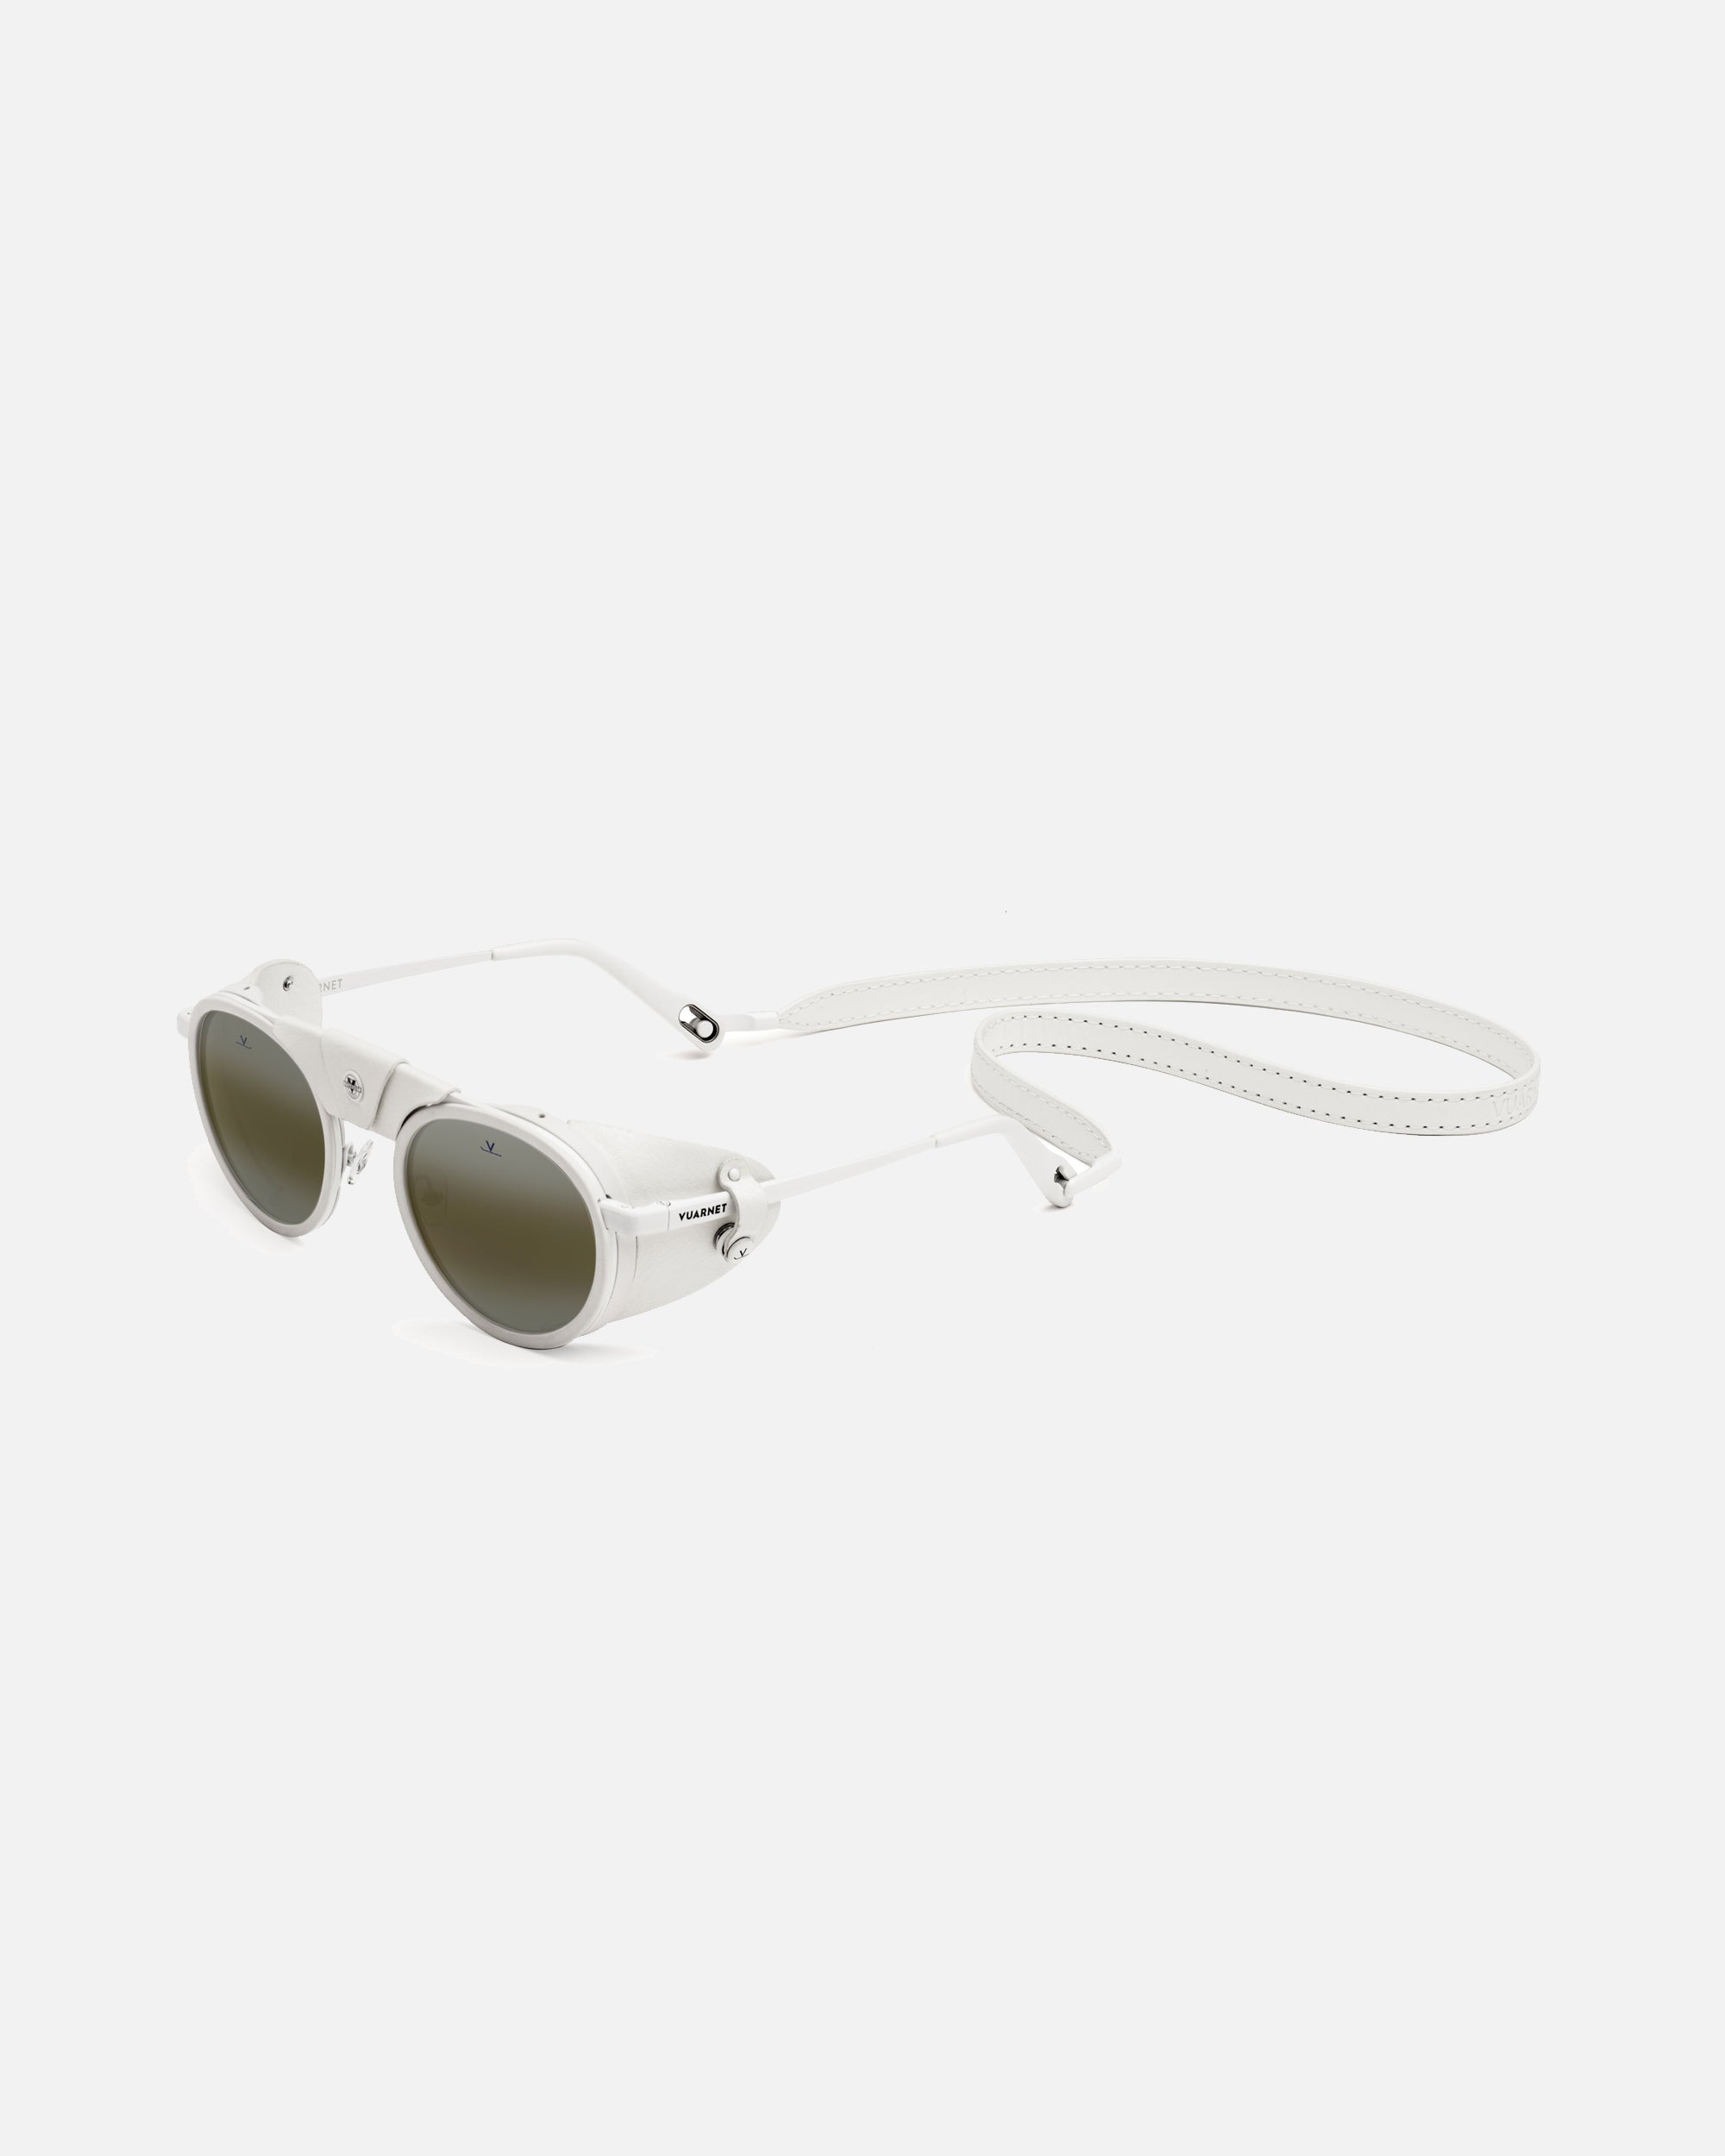 Buy Vuarnet Extreme Unisex VE5001 Athletic Plastic Sunglasses at Amazon.in